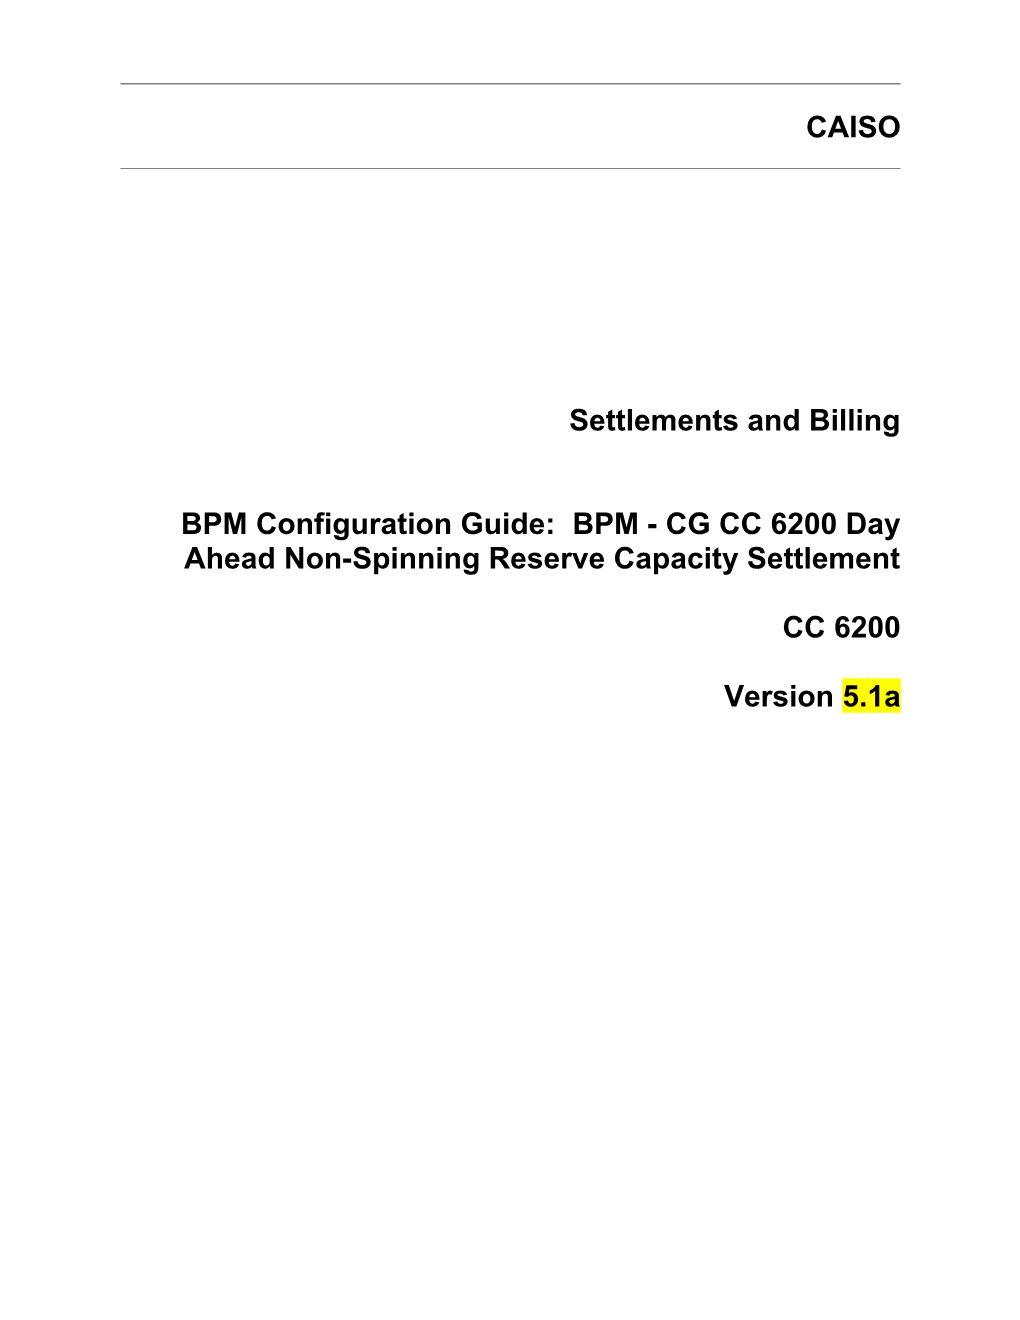 BPM - CG CC 6200 Day Ahead Non-Spinning Reserve Capacity Settlement